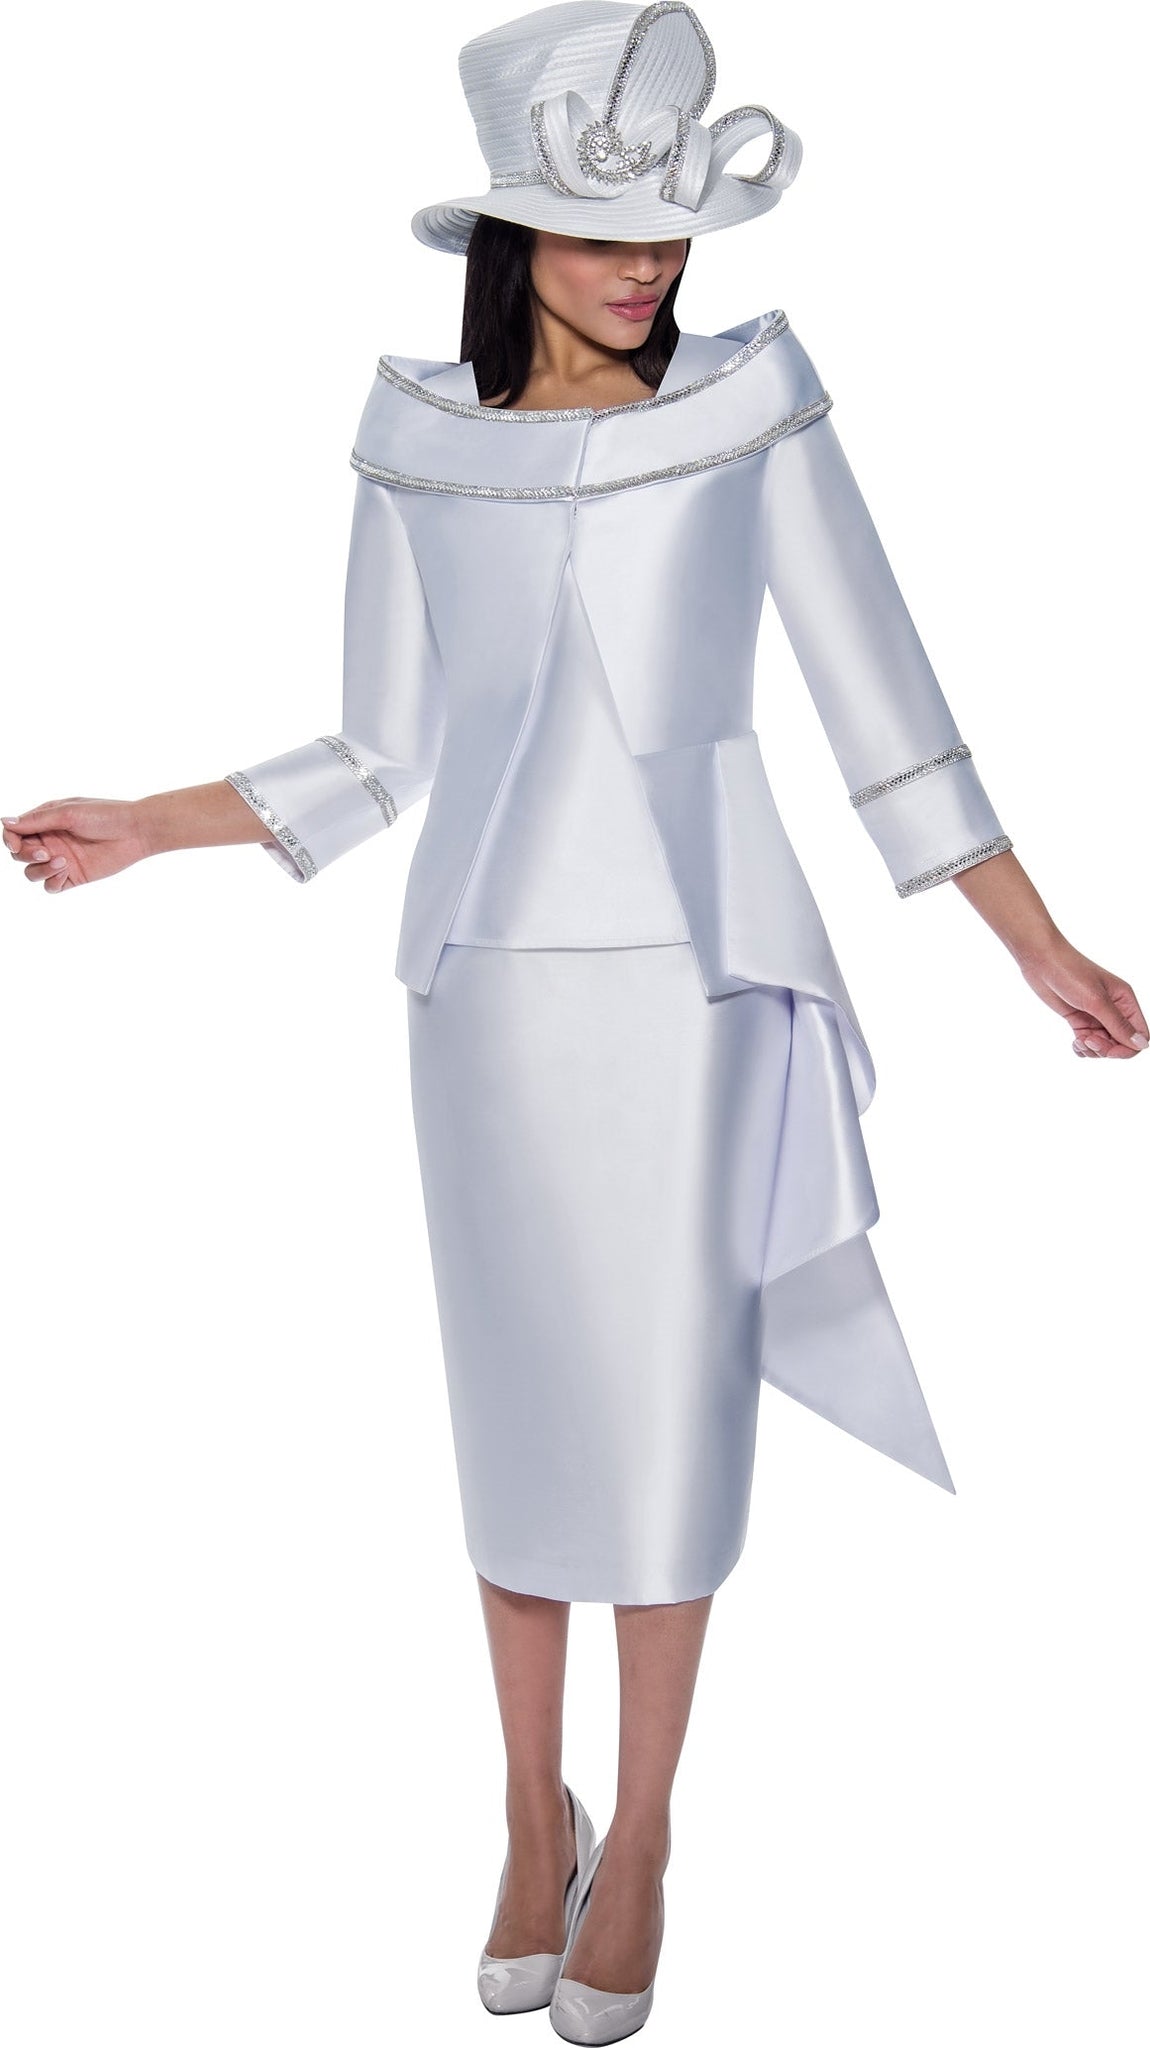 GMI Church Suit 9683C-White - Church Suits For Less